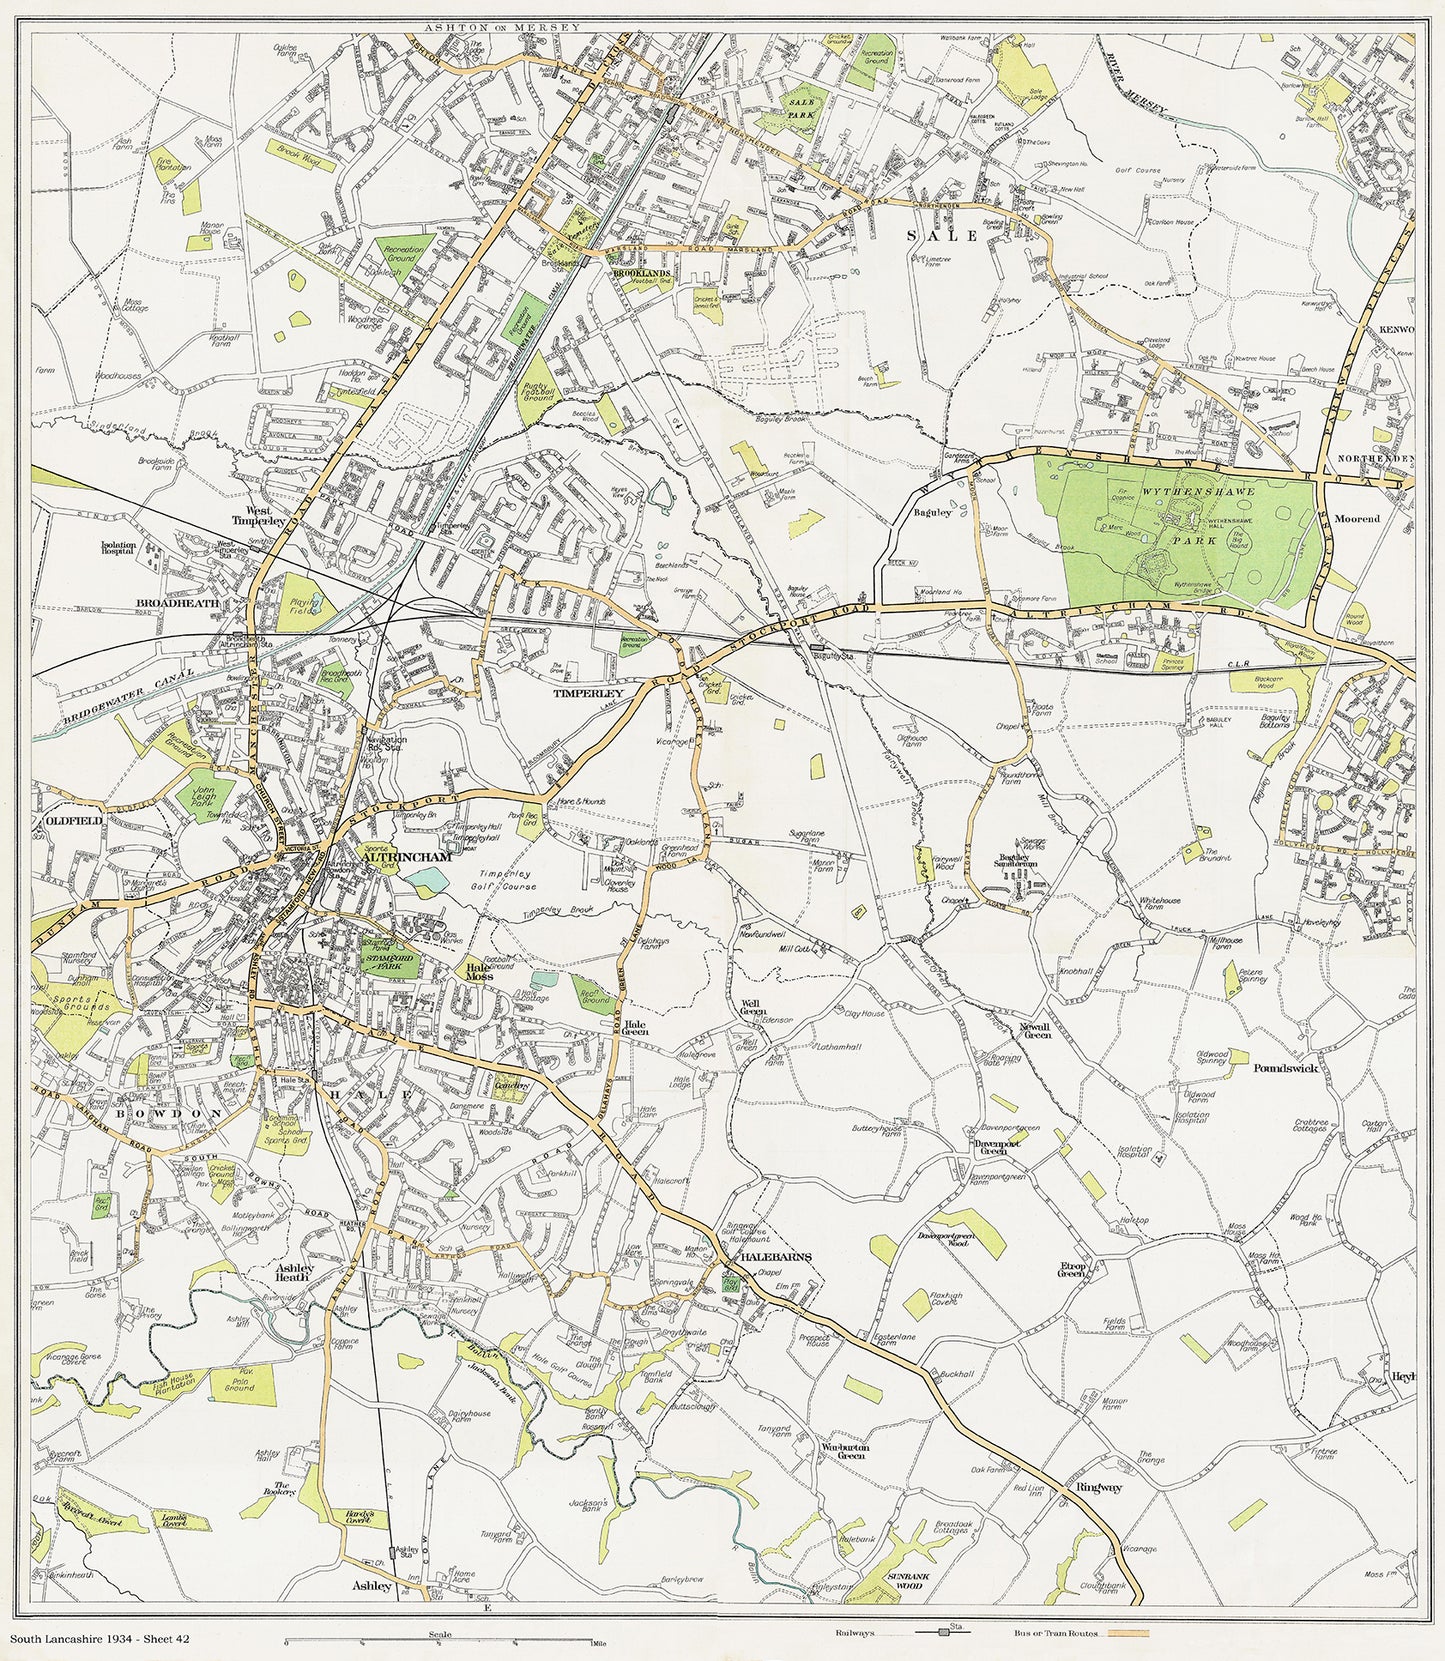 Lancashire (south) 1934 Series - Altrincham, Ashton-on-Mersey (south), Sale, Bowdon, Hale, Halebarns area - sheet 42